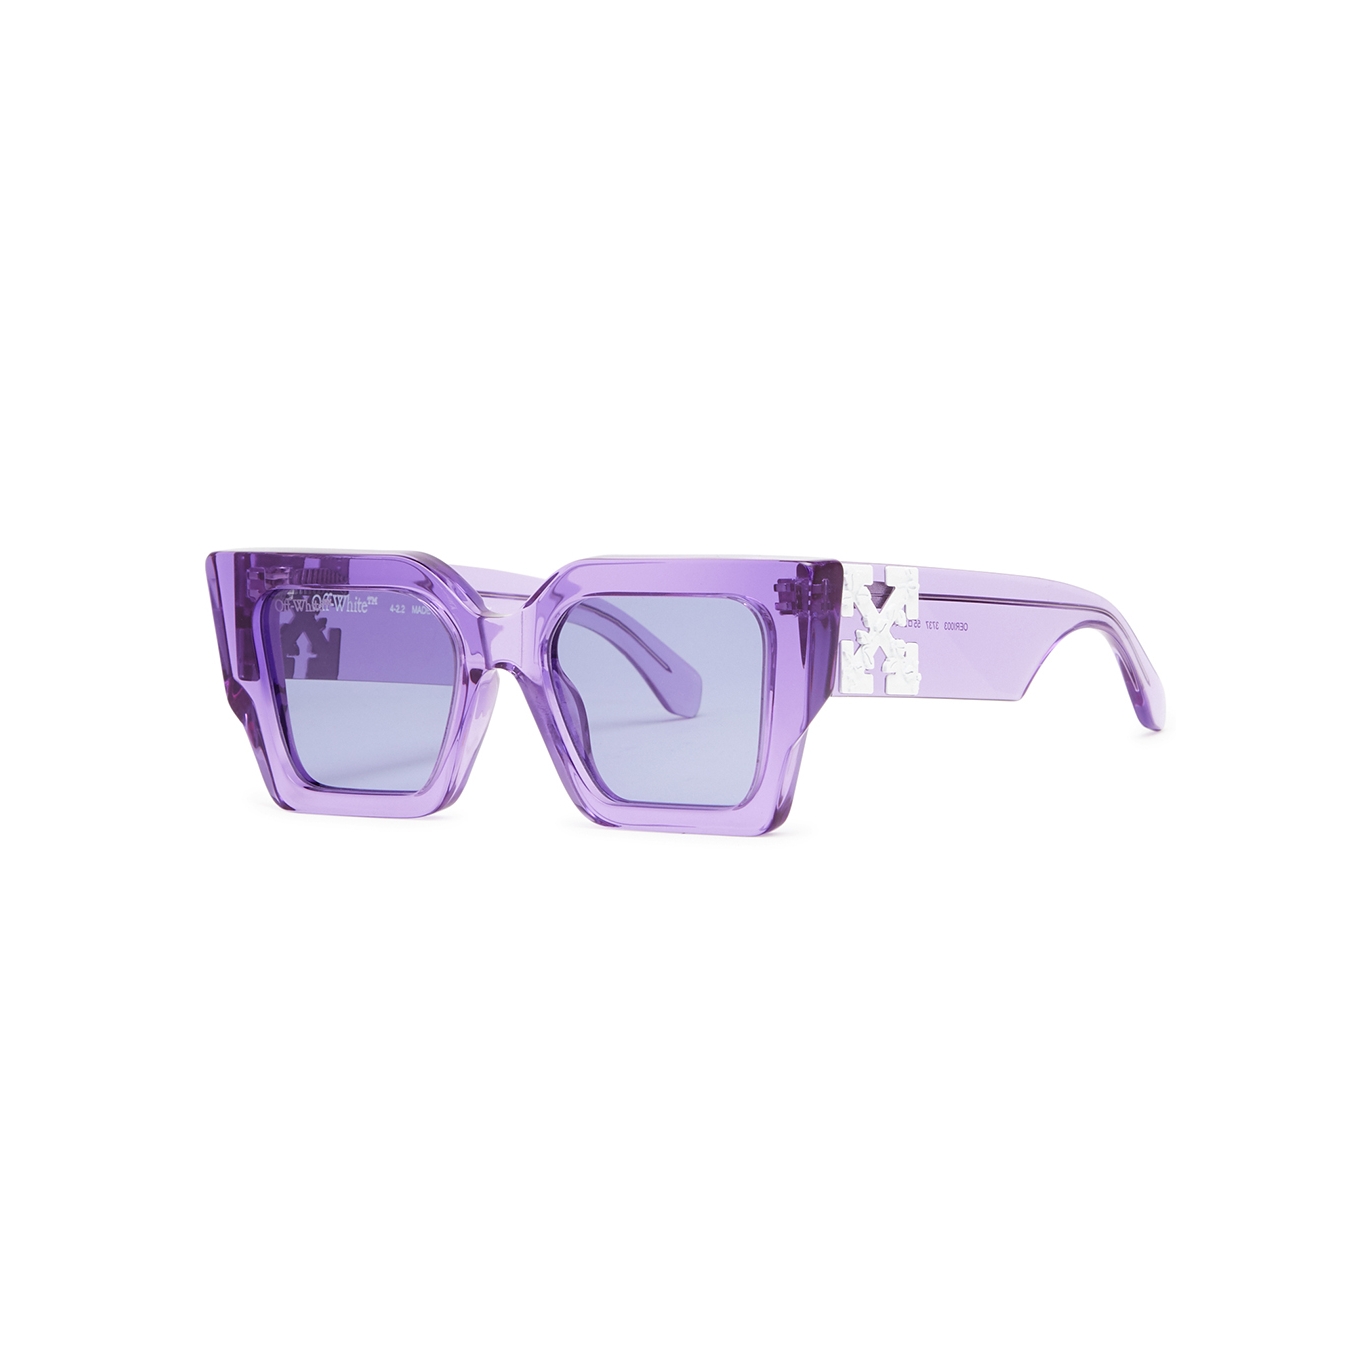 Catalina Sunglasses in purple